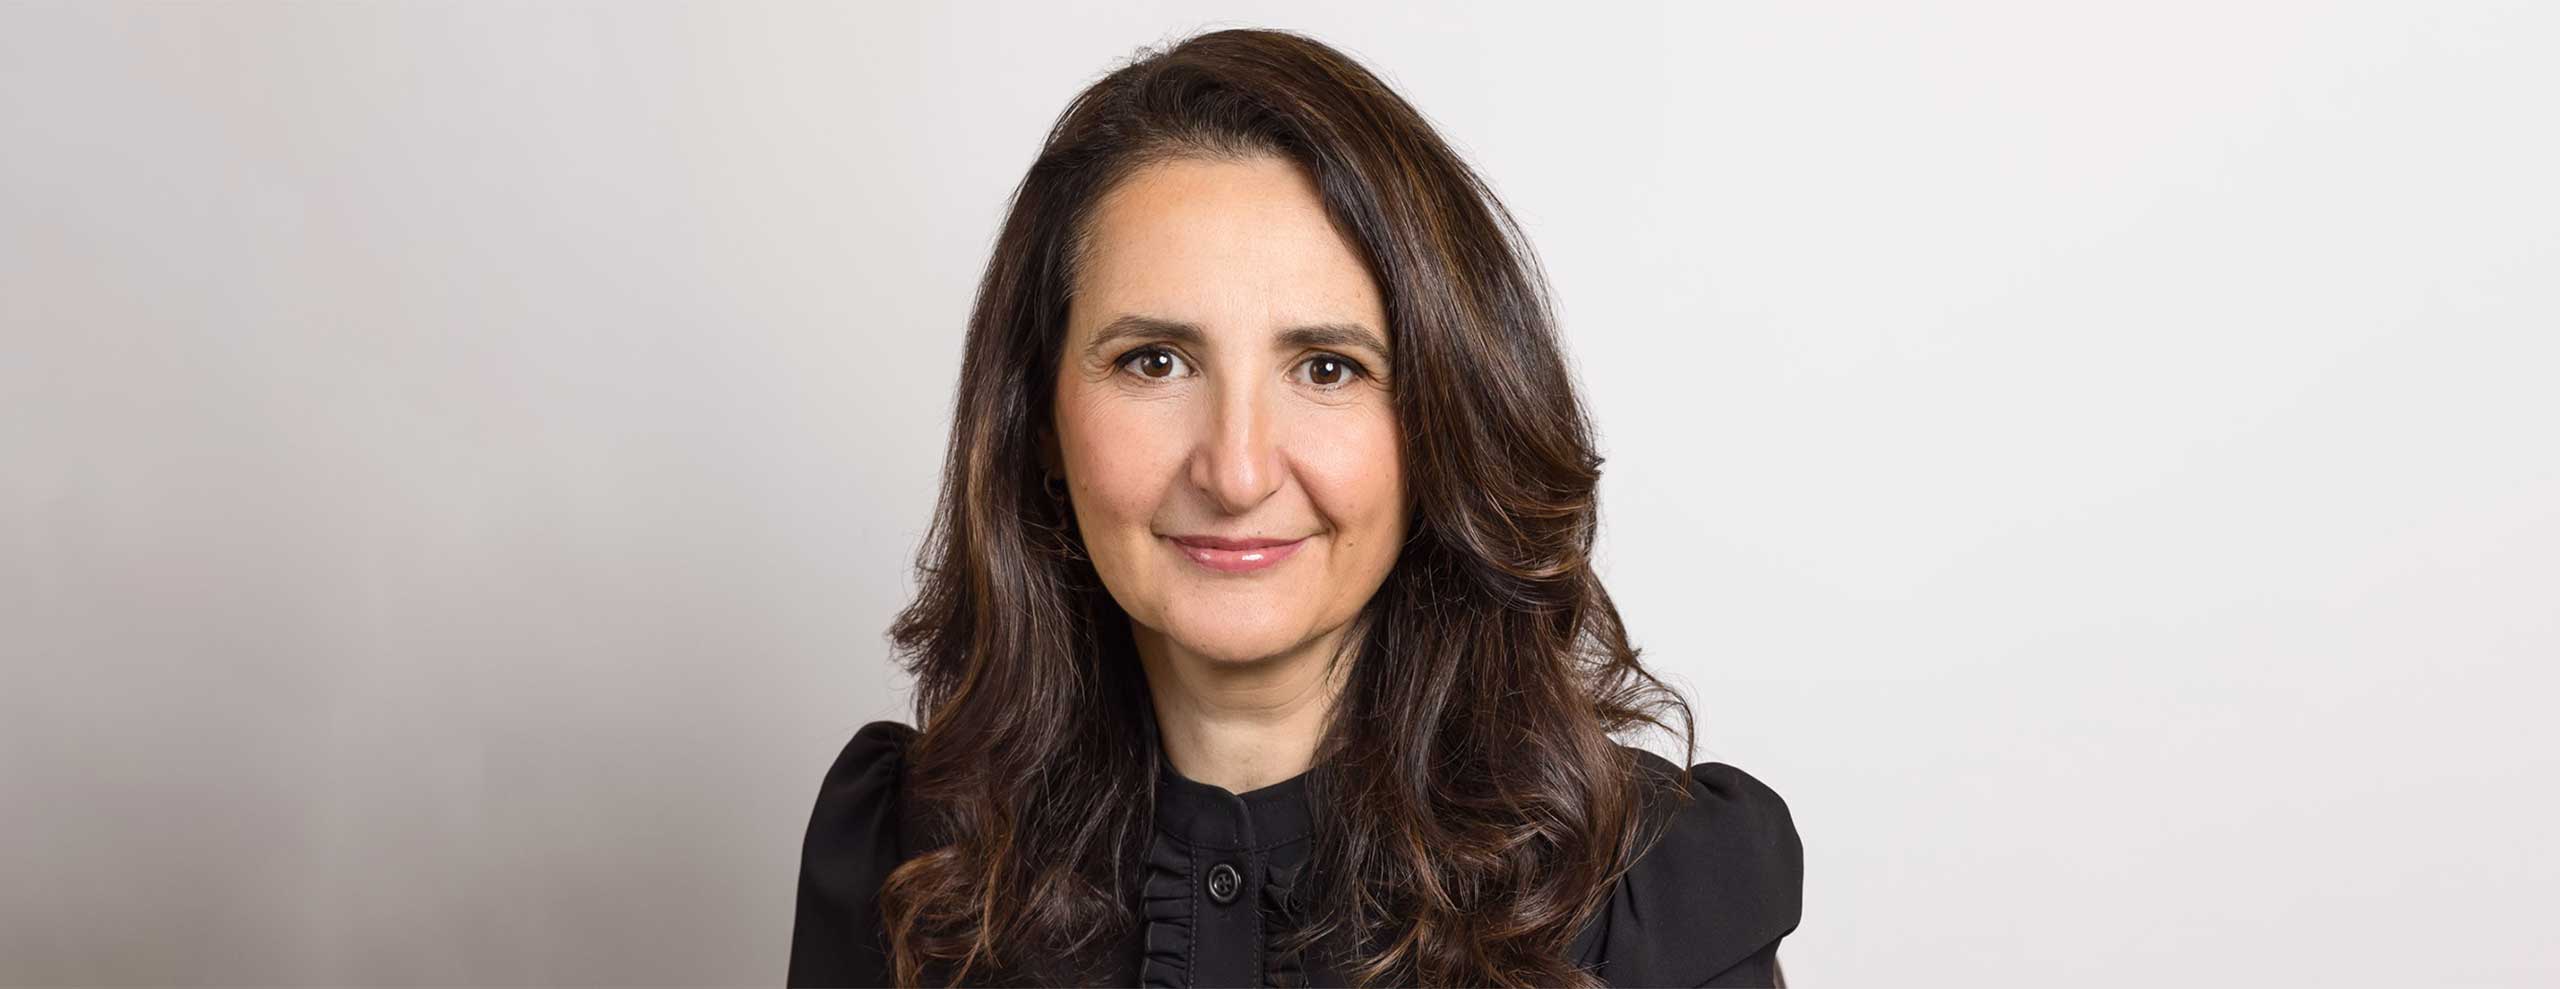 Audemars Piguet’s new CEO, Ilaria Resta